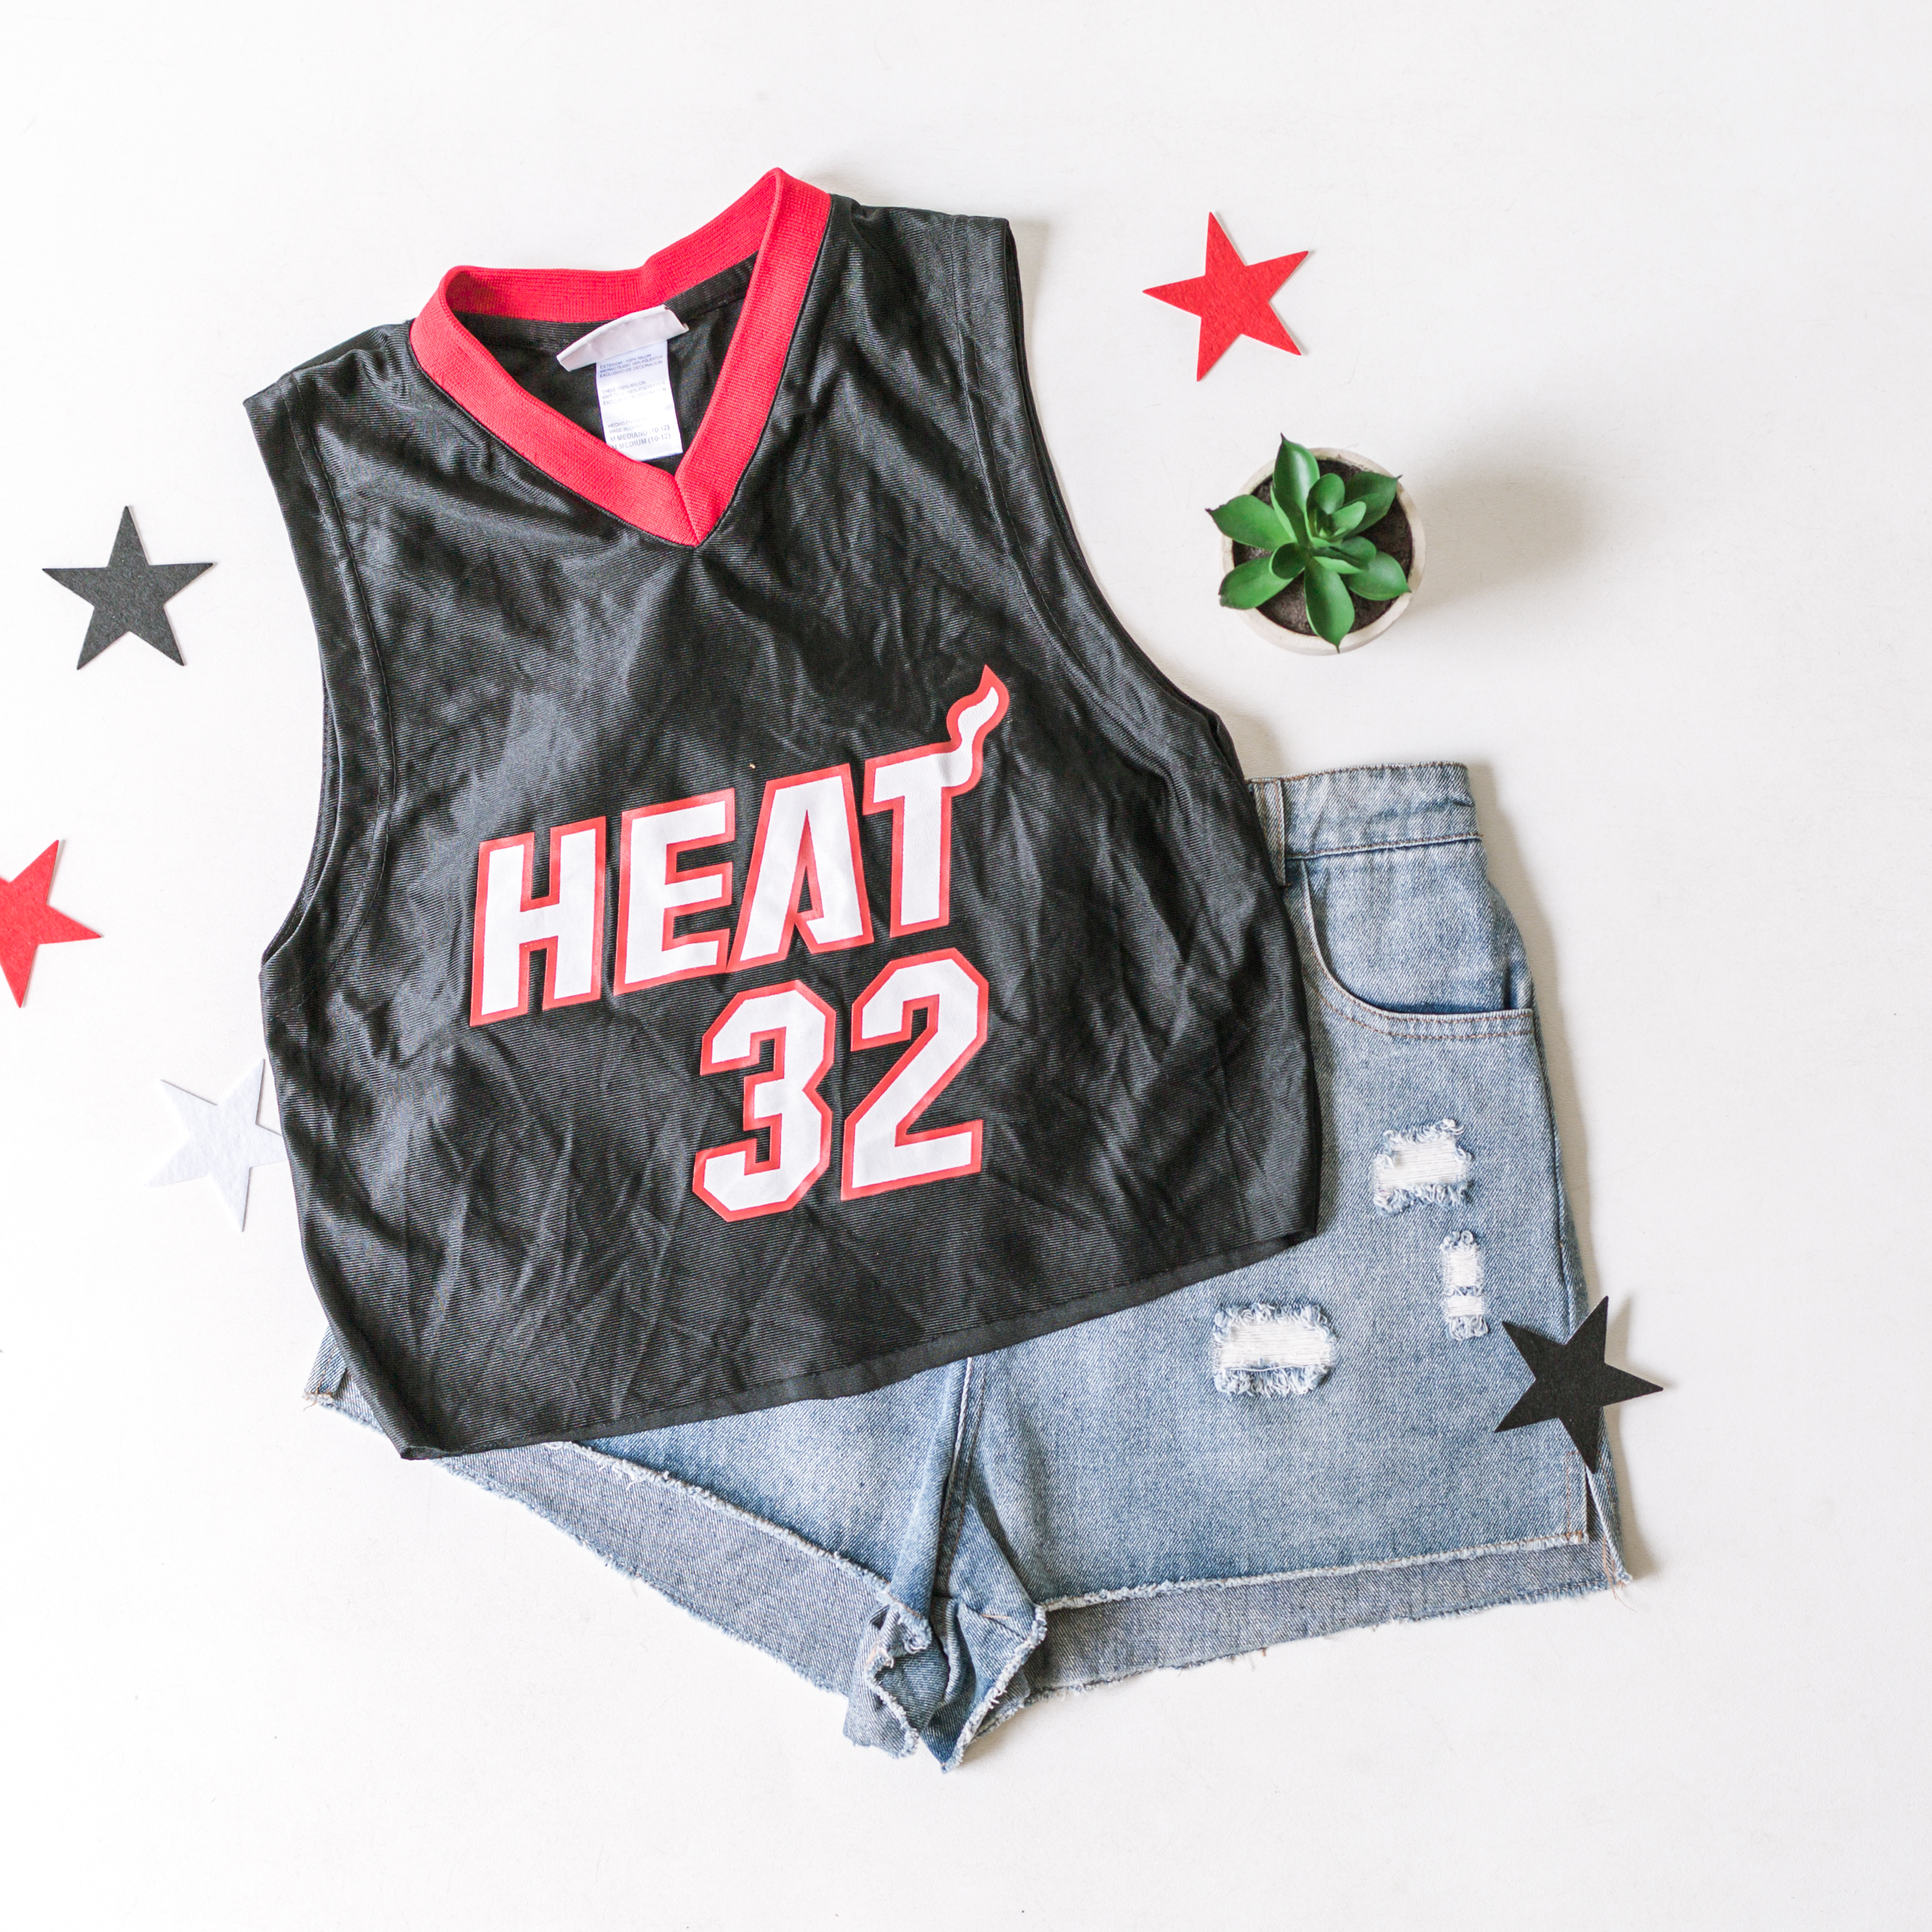 Miami Heat Ladies Jerseys, Heat Uniforms